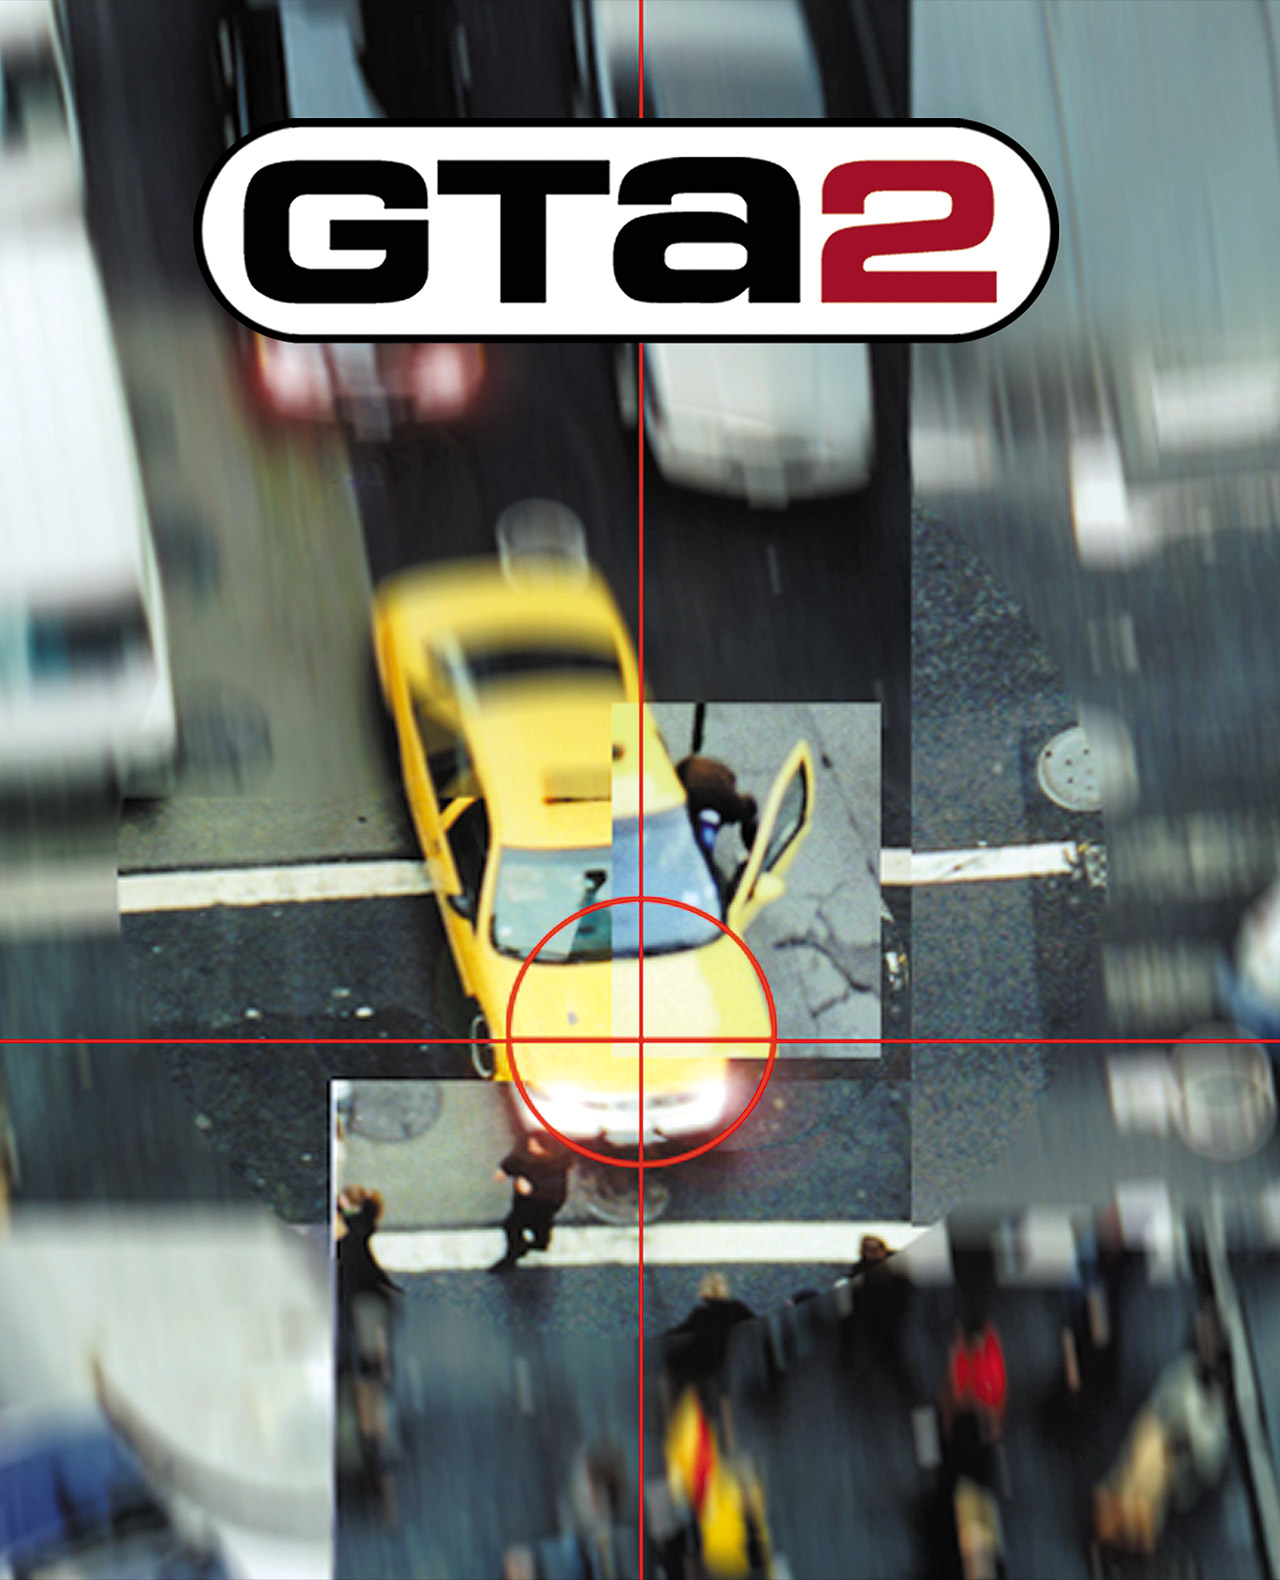 gta 2 game free download